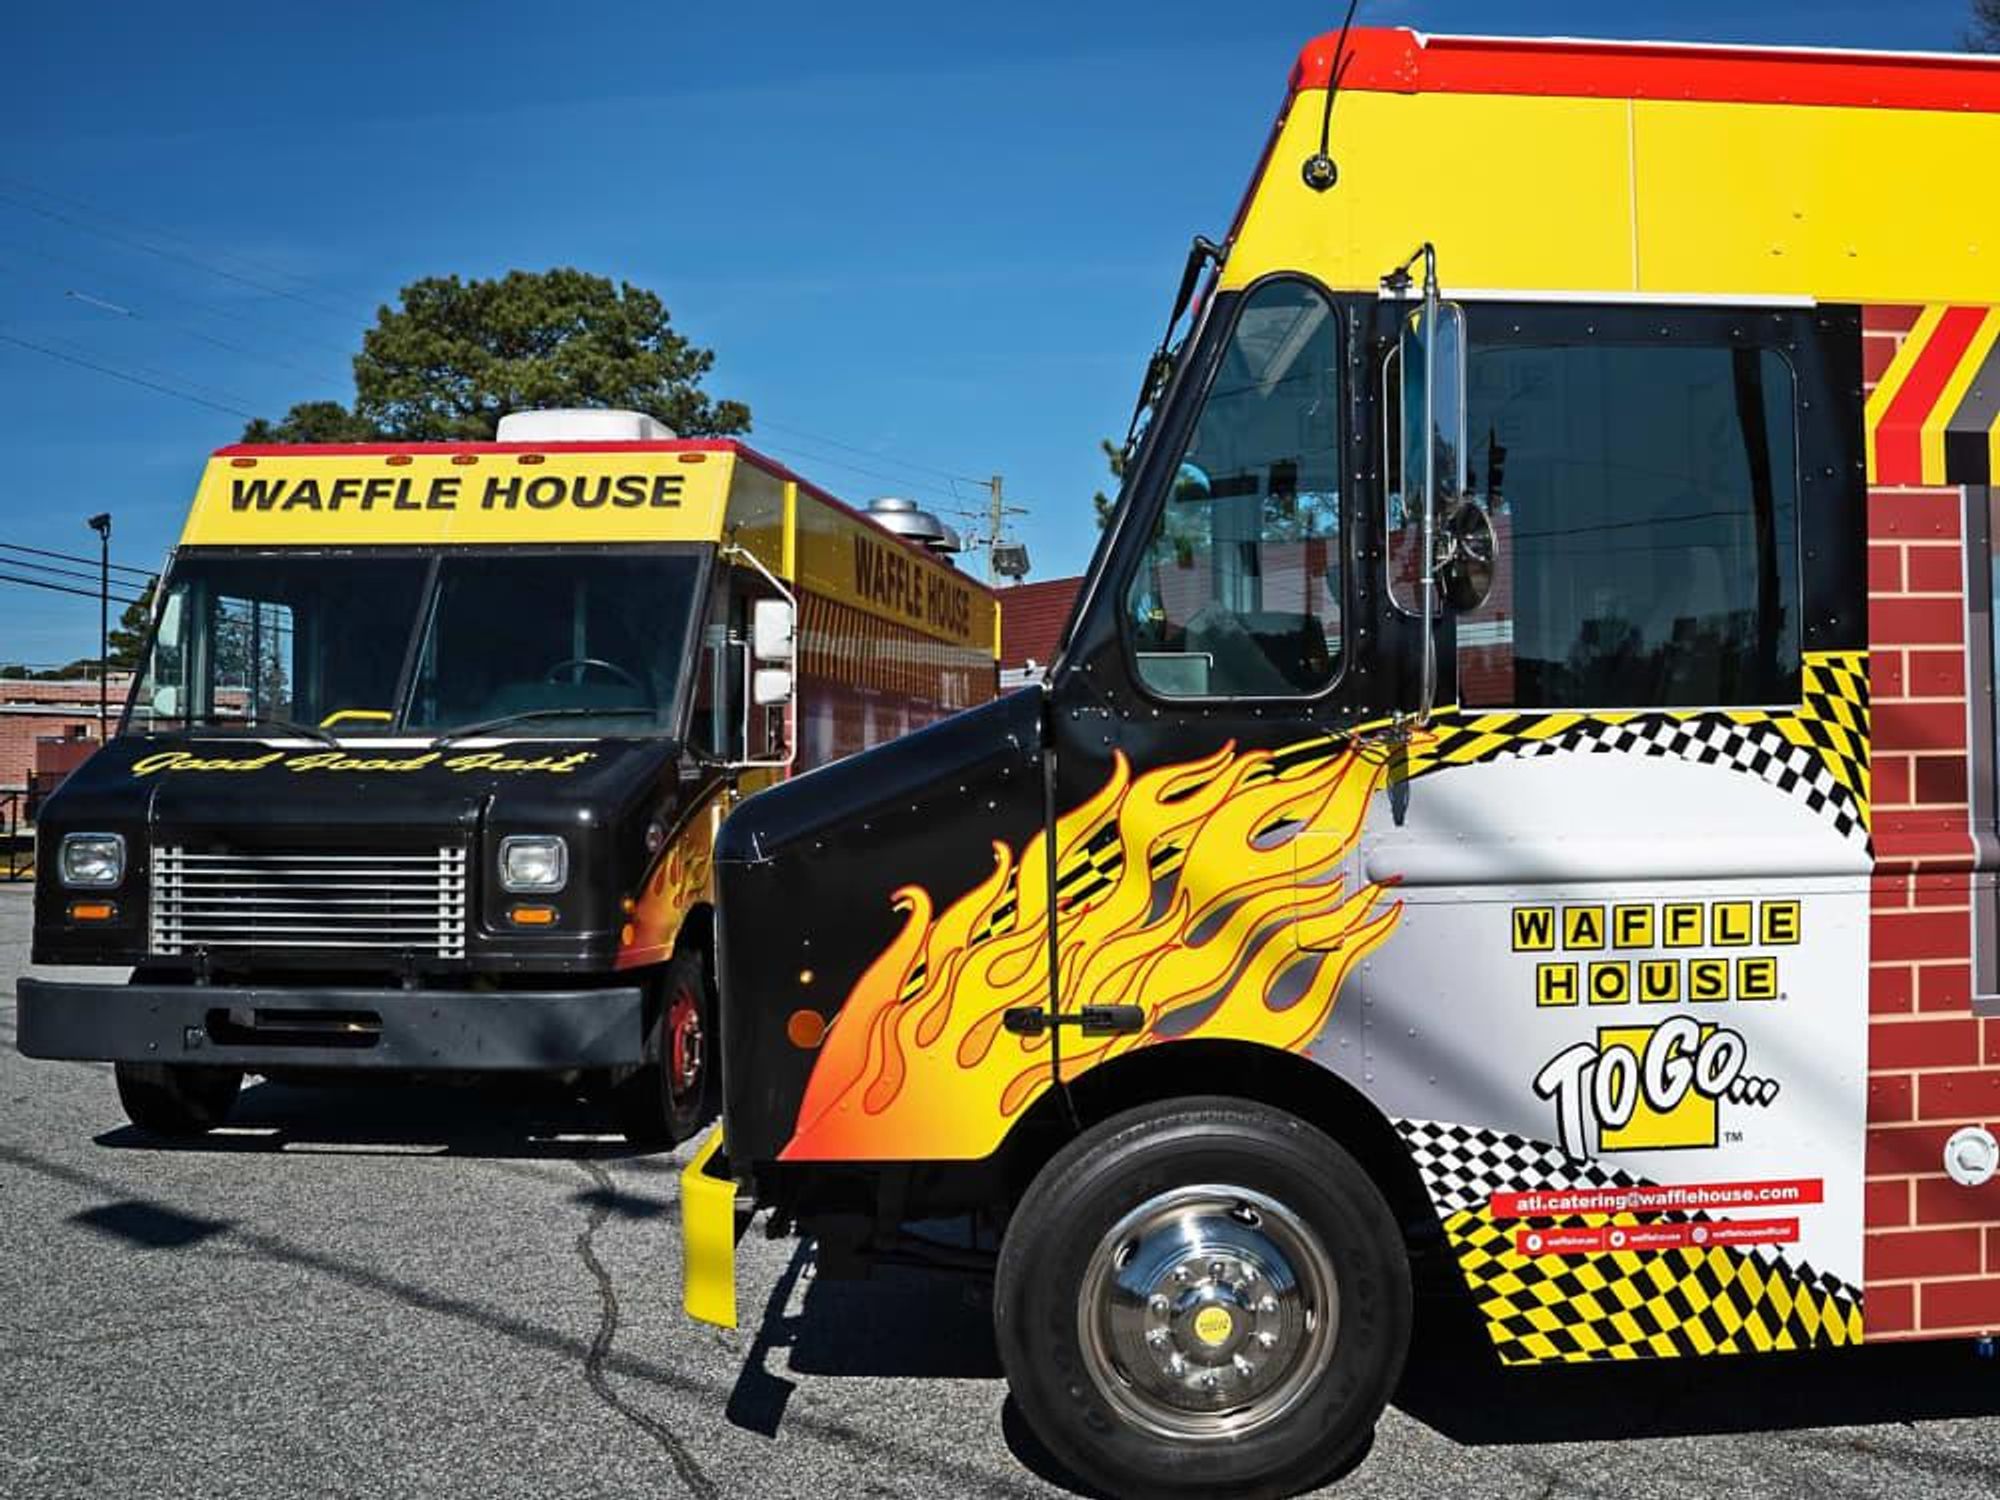 Waffle House trucks